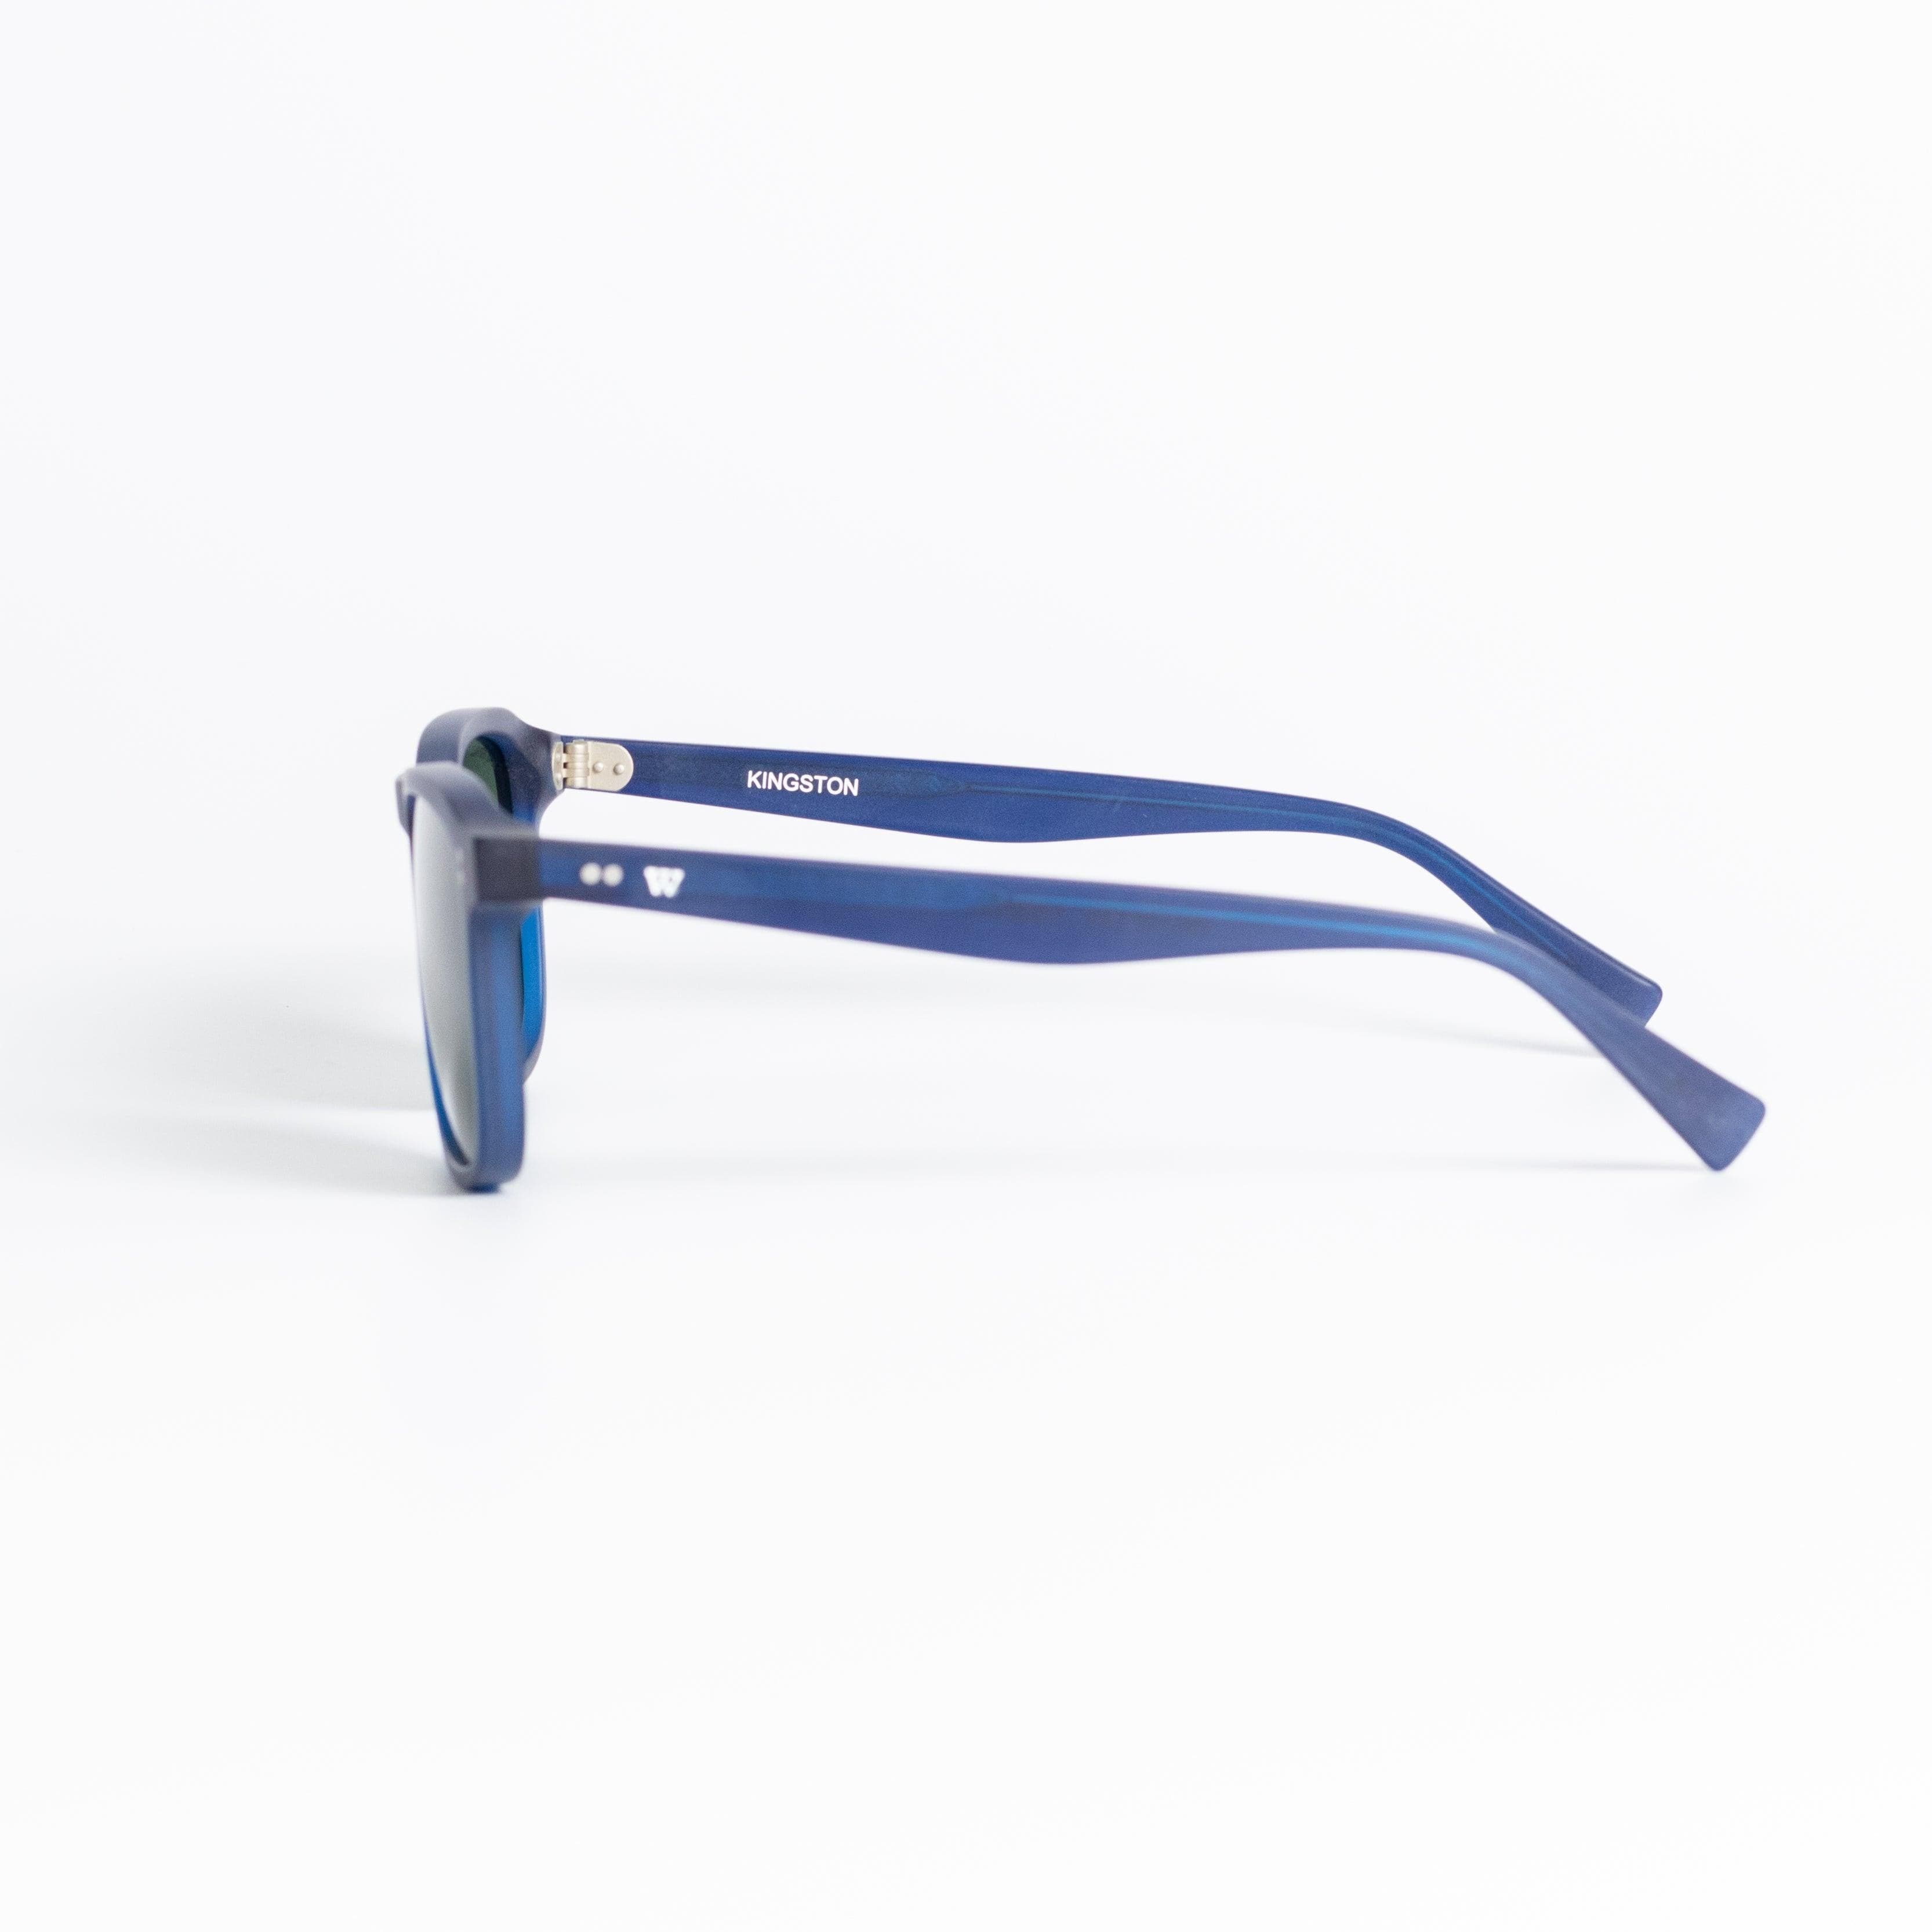 Walter Hill Sunglasses Matte Blue / Standard / Polarized Cat.3 KINGSTON - Matte Blue